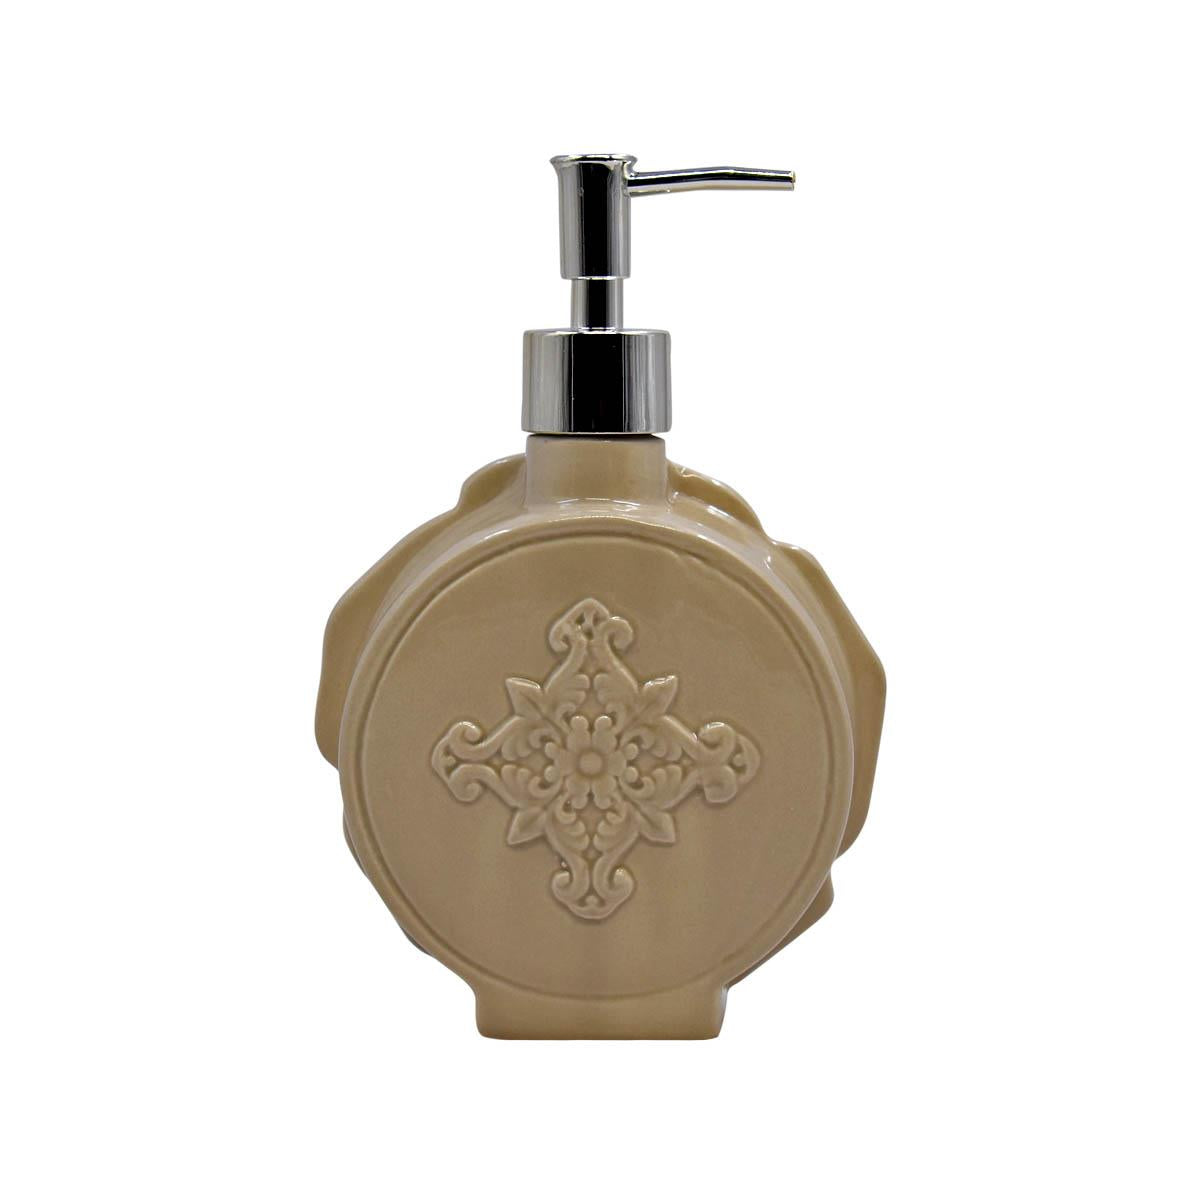 Ceramic Soap Dispenser handwash Pump for Bathroom, Set of 1, Brown (7958)